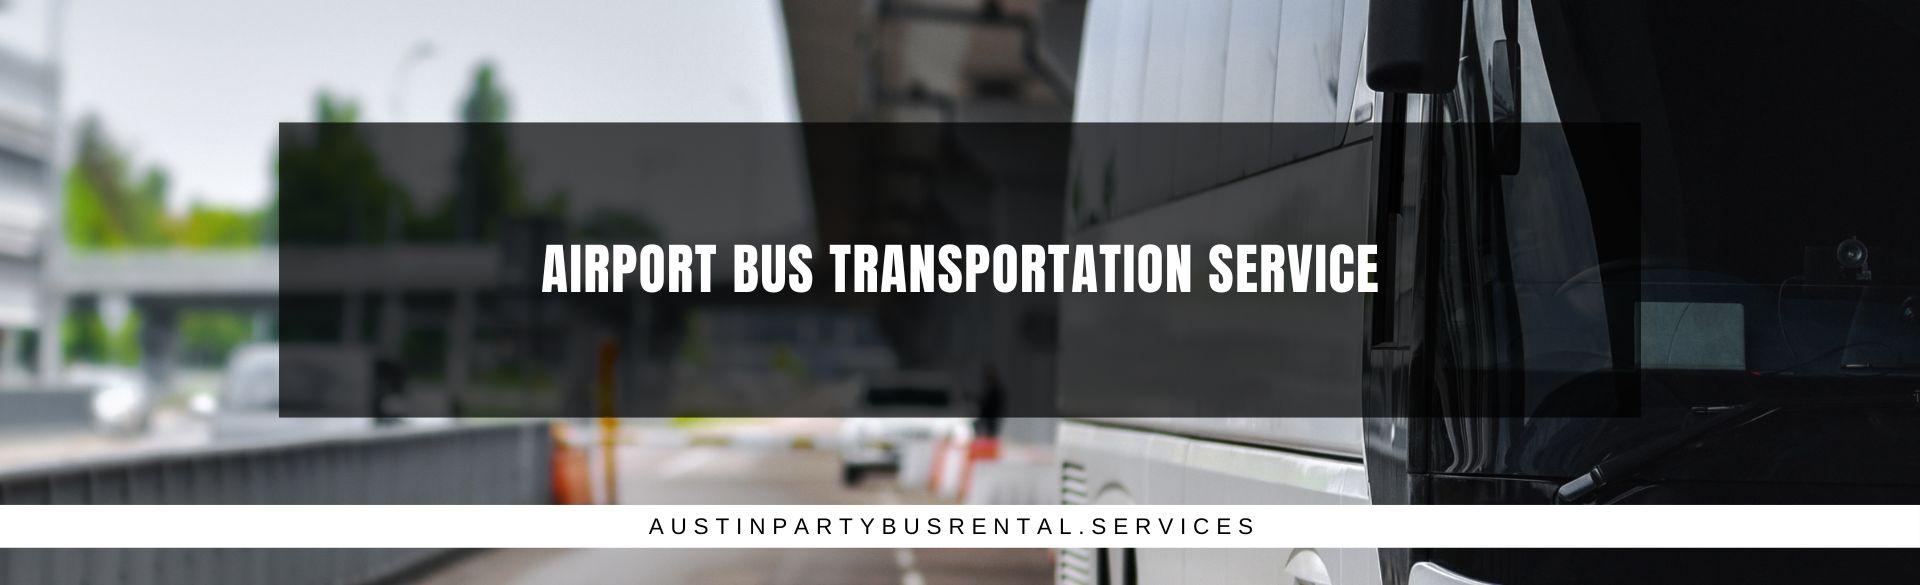 Airport Bus Transportation Service